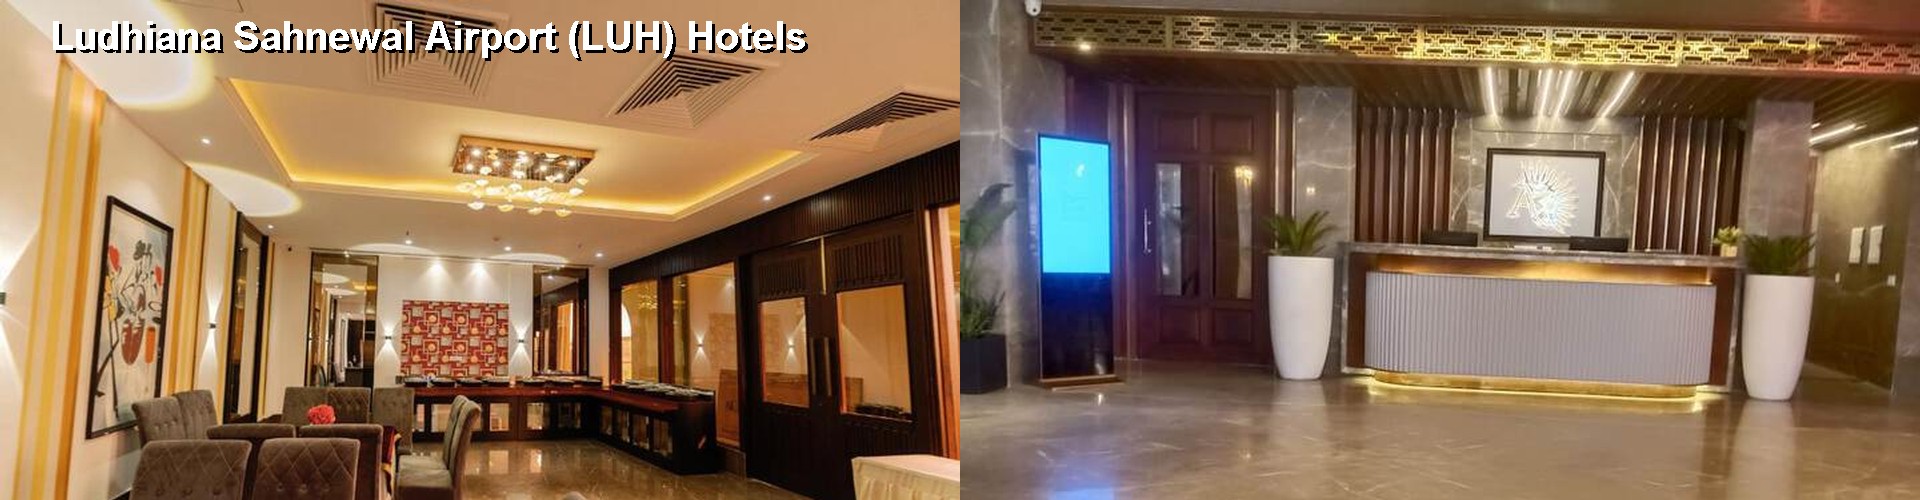 3 Best Hotels near Ludhiana Sahnewal Airport (LUH)